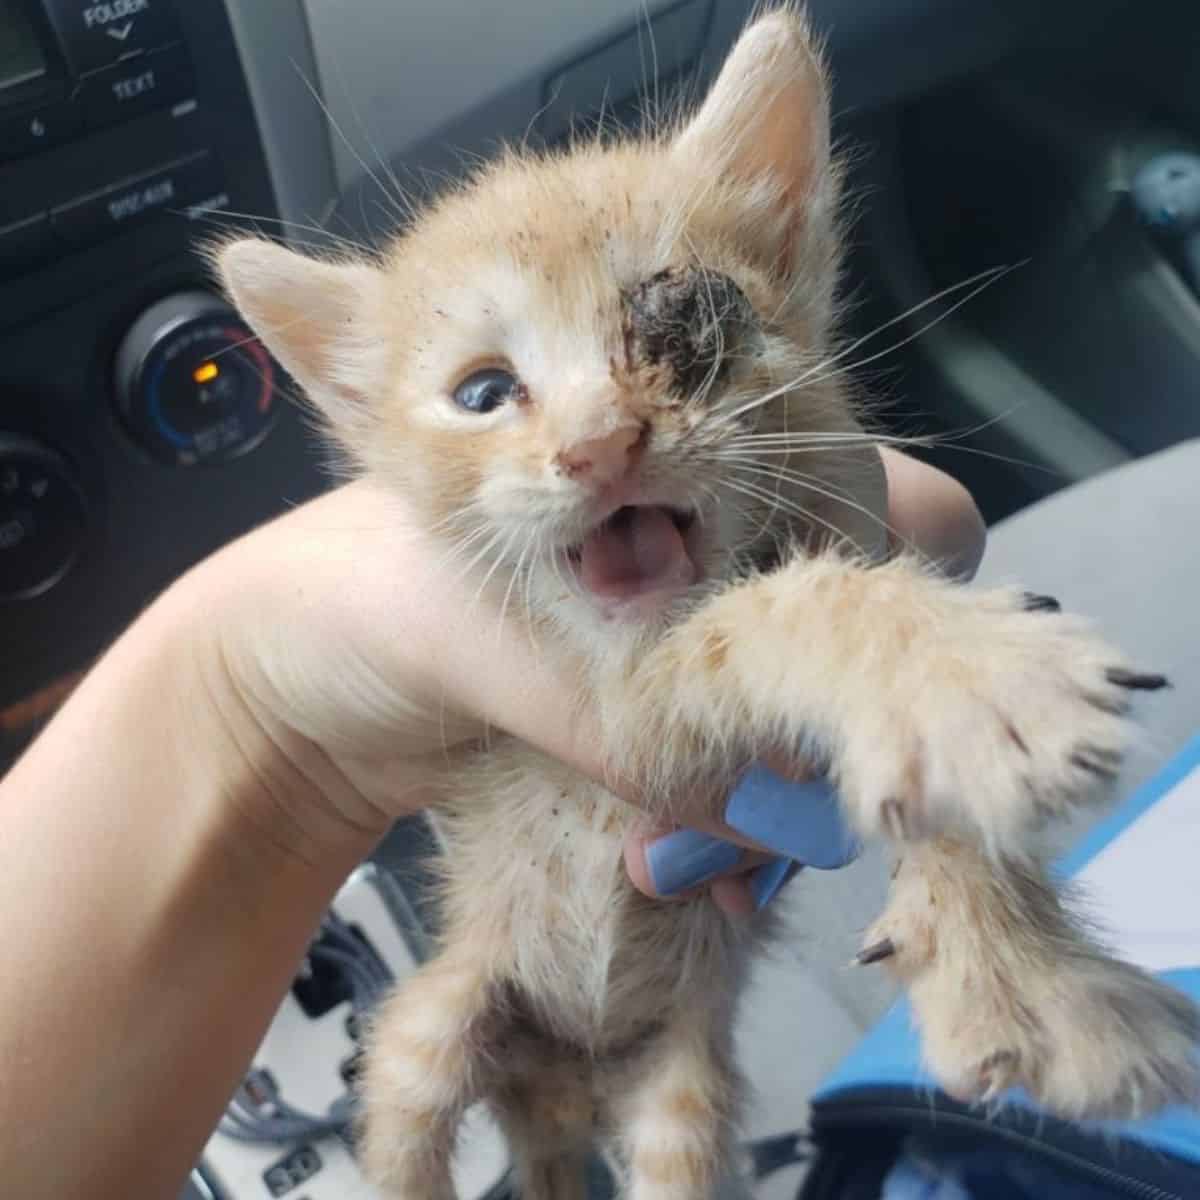 kitten with an injury